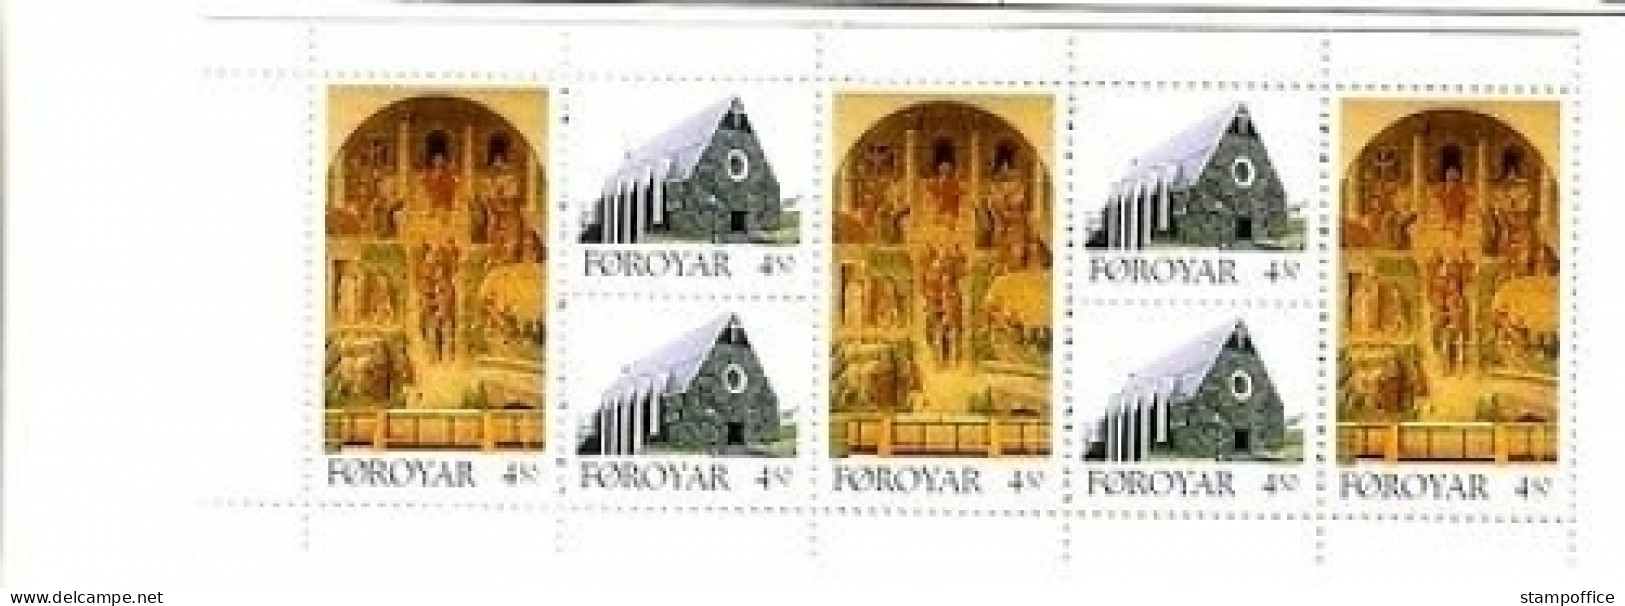 FÄRÖER MH 12 POSTFRISCH(MINT) CHRISTIANSKIRCHE IN KLAKSVIK 1996 - Färöer Inseln